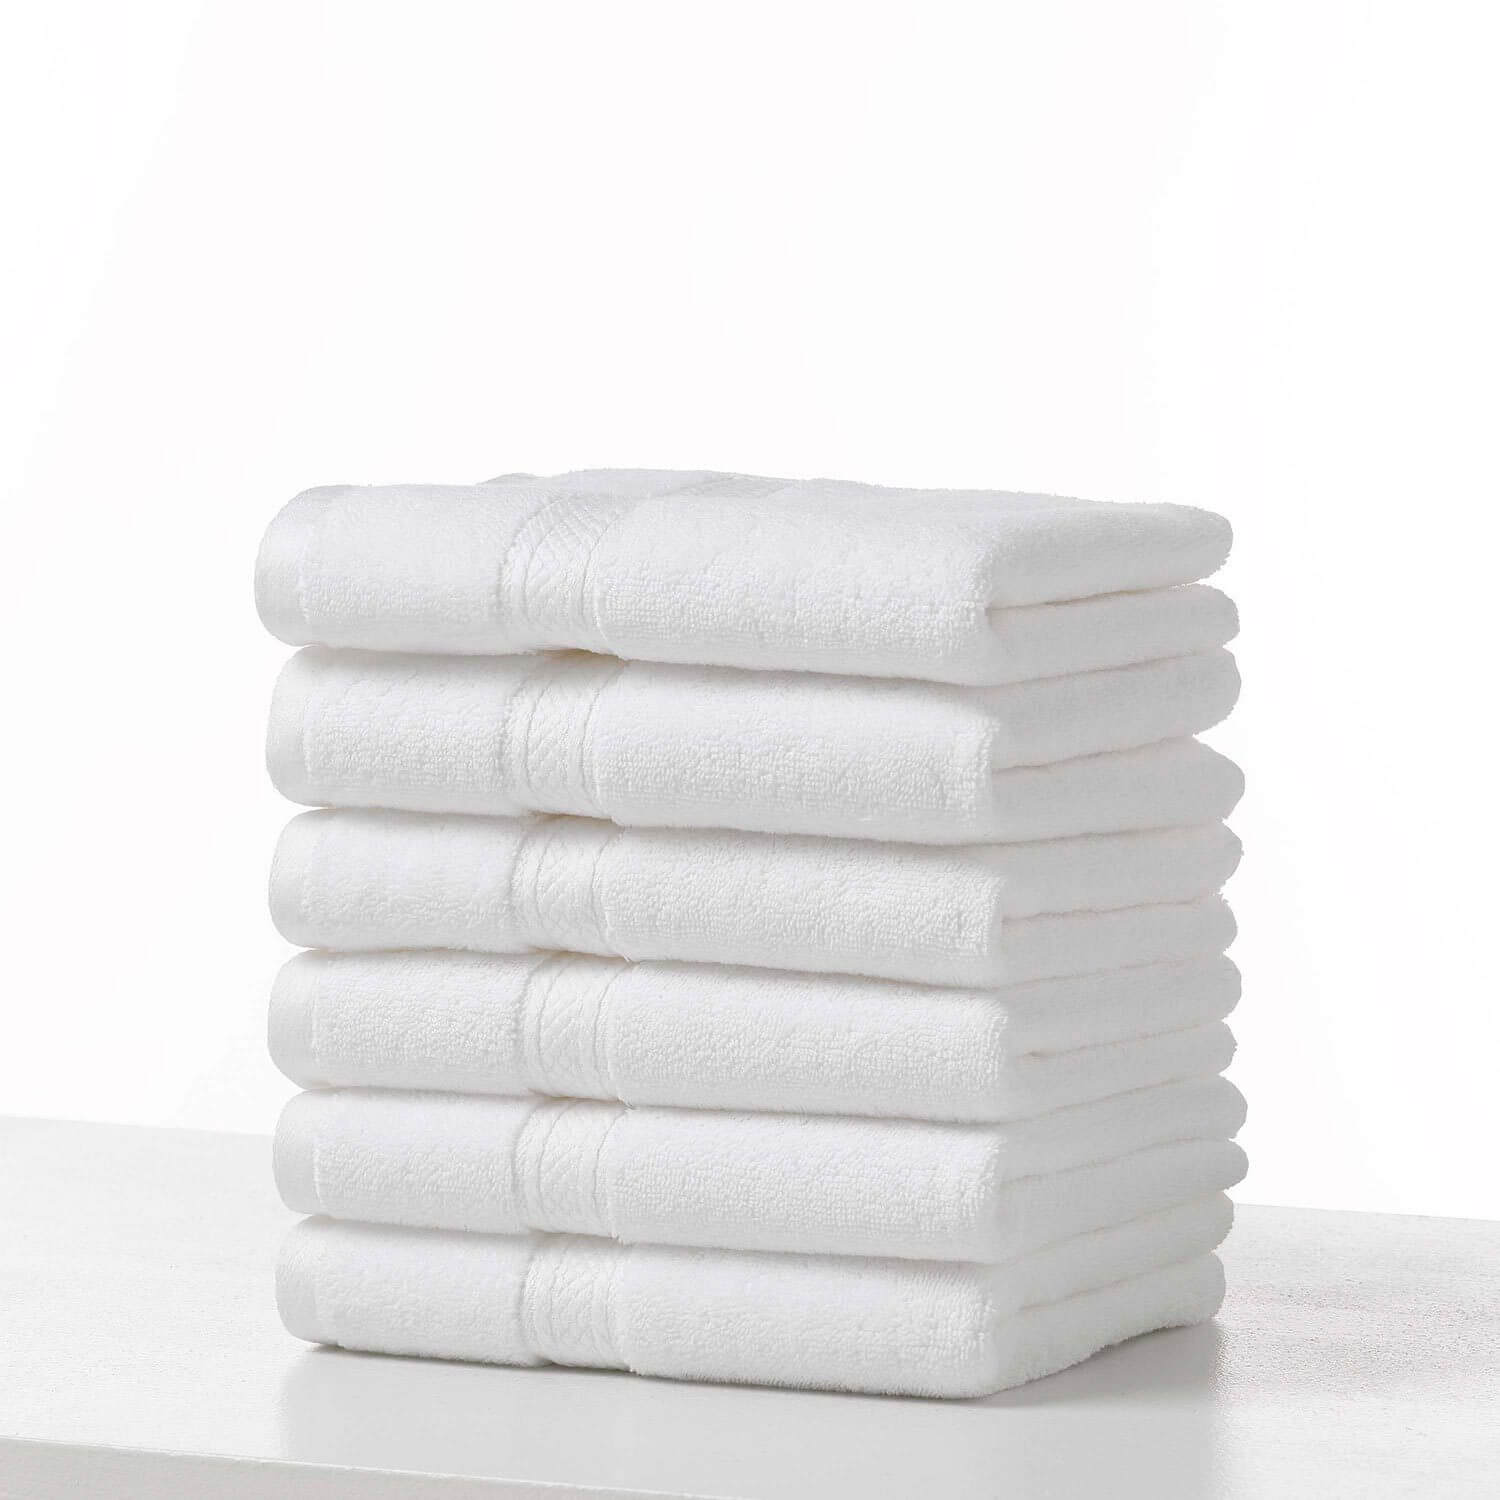 6 new white hair bath salon gym workout towels 24x48 100% cotton wholesale 